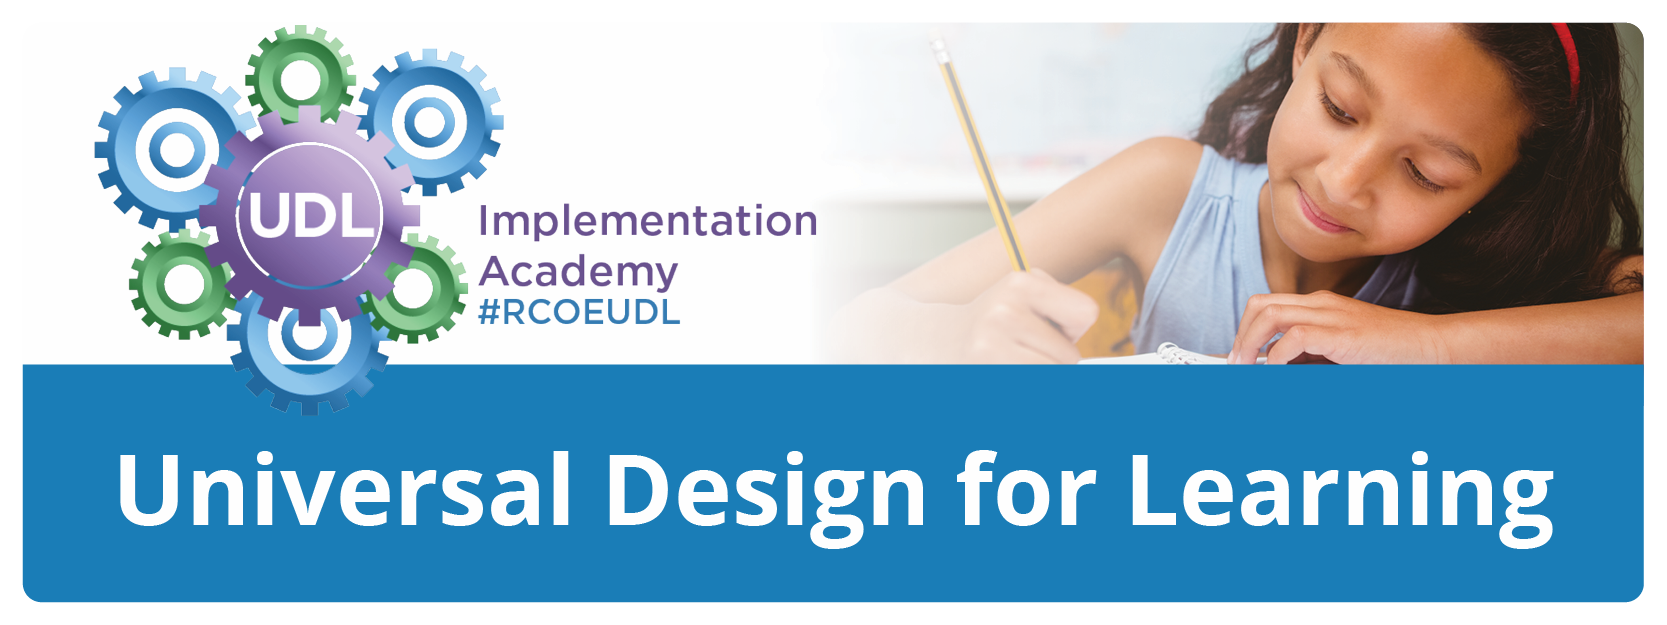 Universal Design Learning. UDL Implementation Academy #RCOEUDL